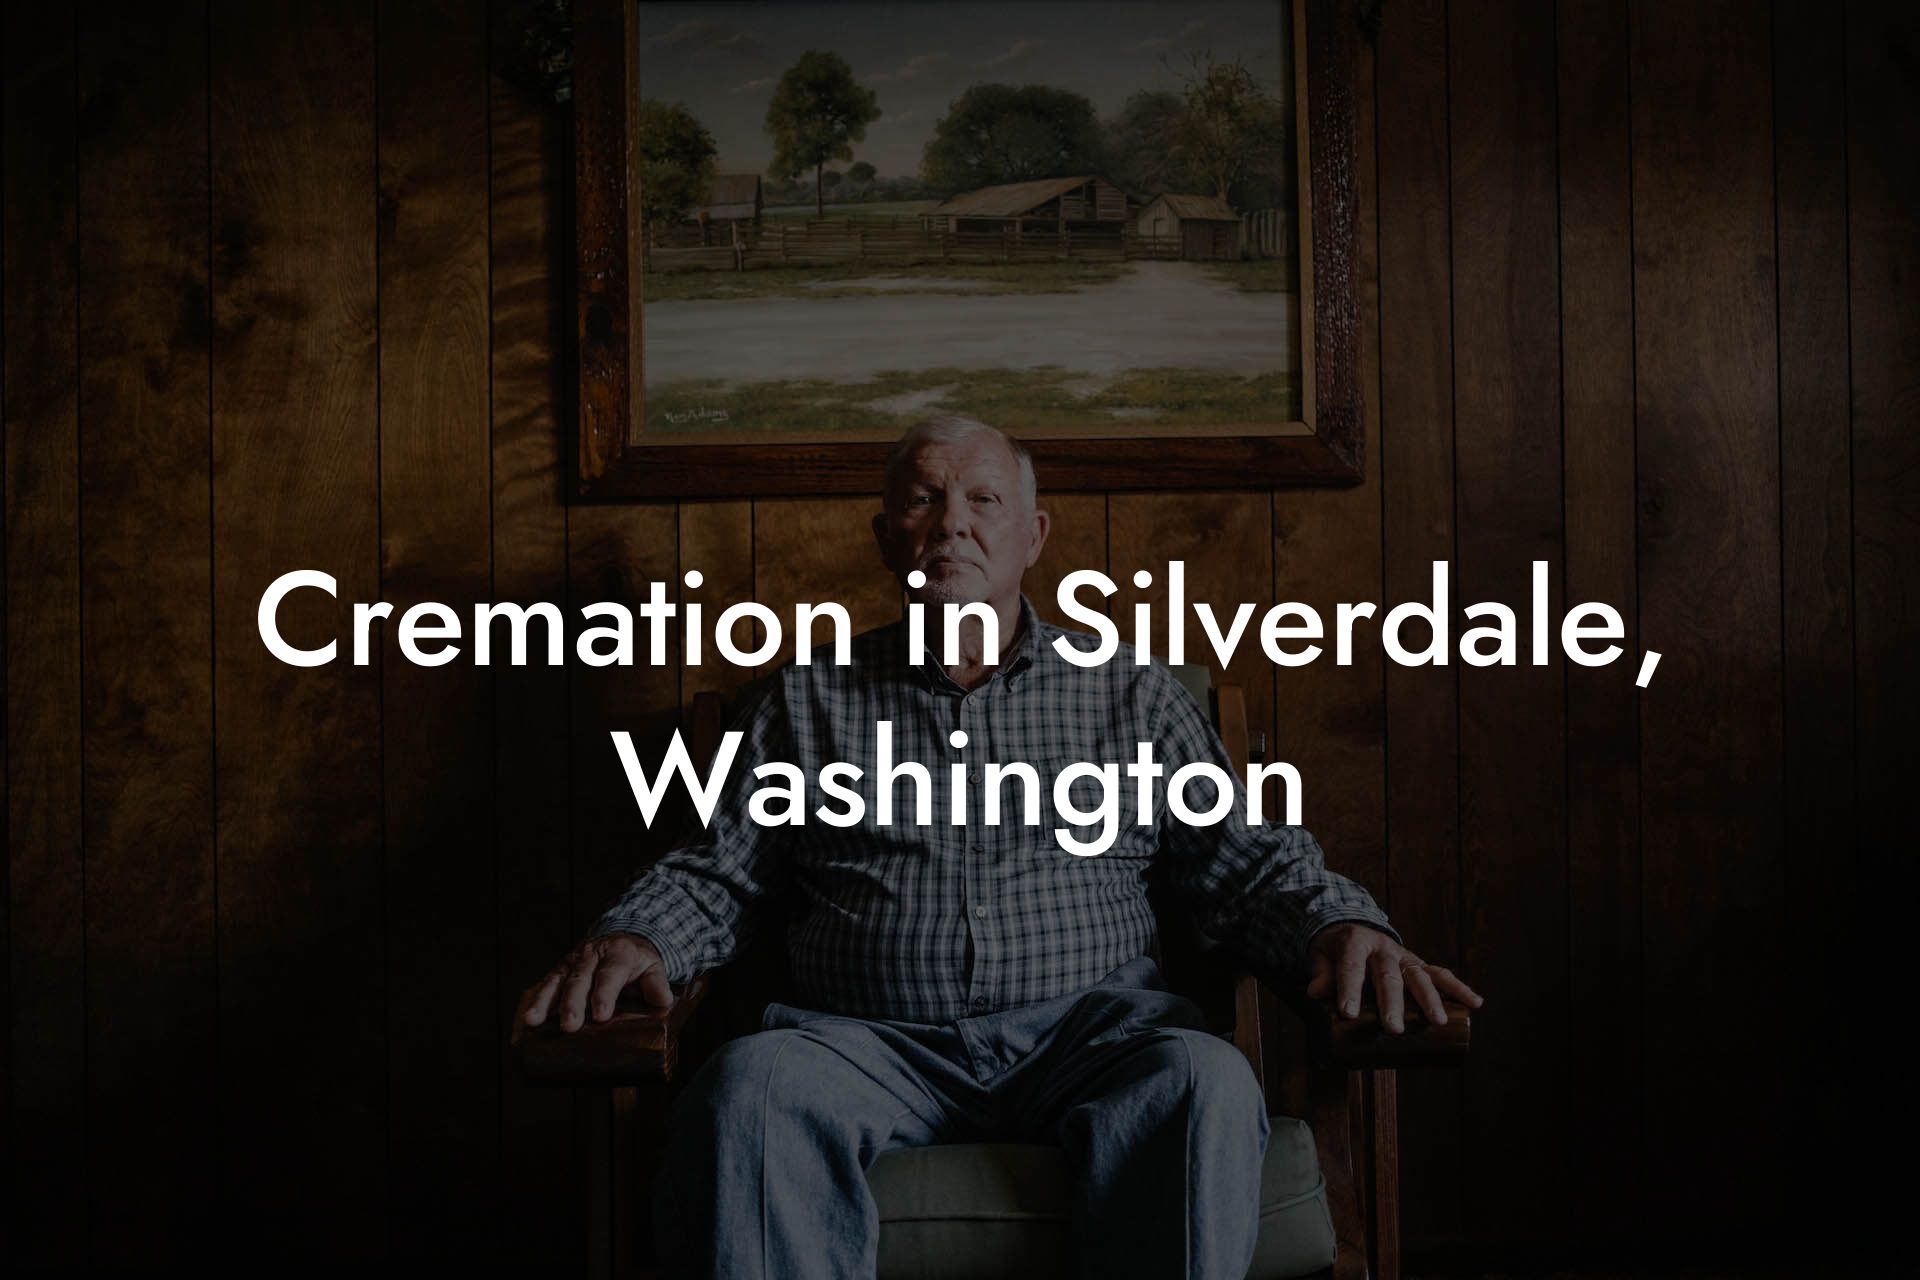 Cremation in Silverdale, Washington